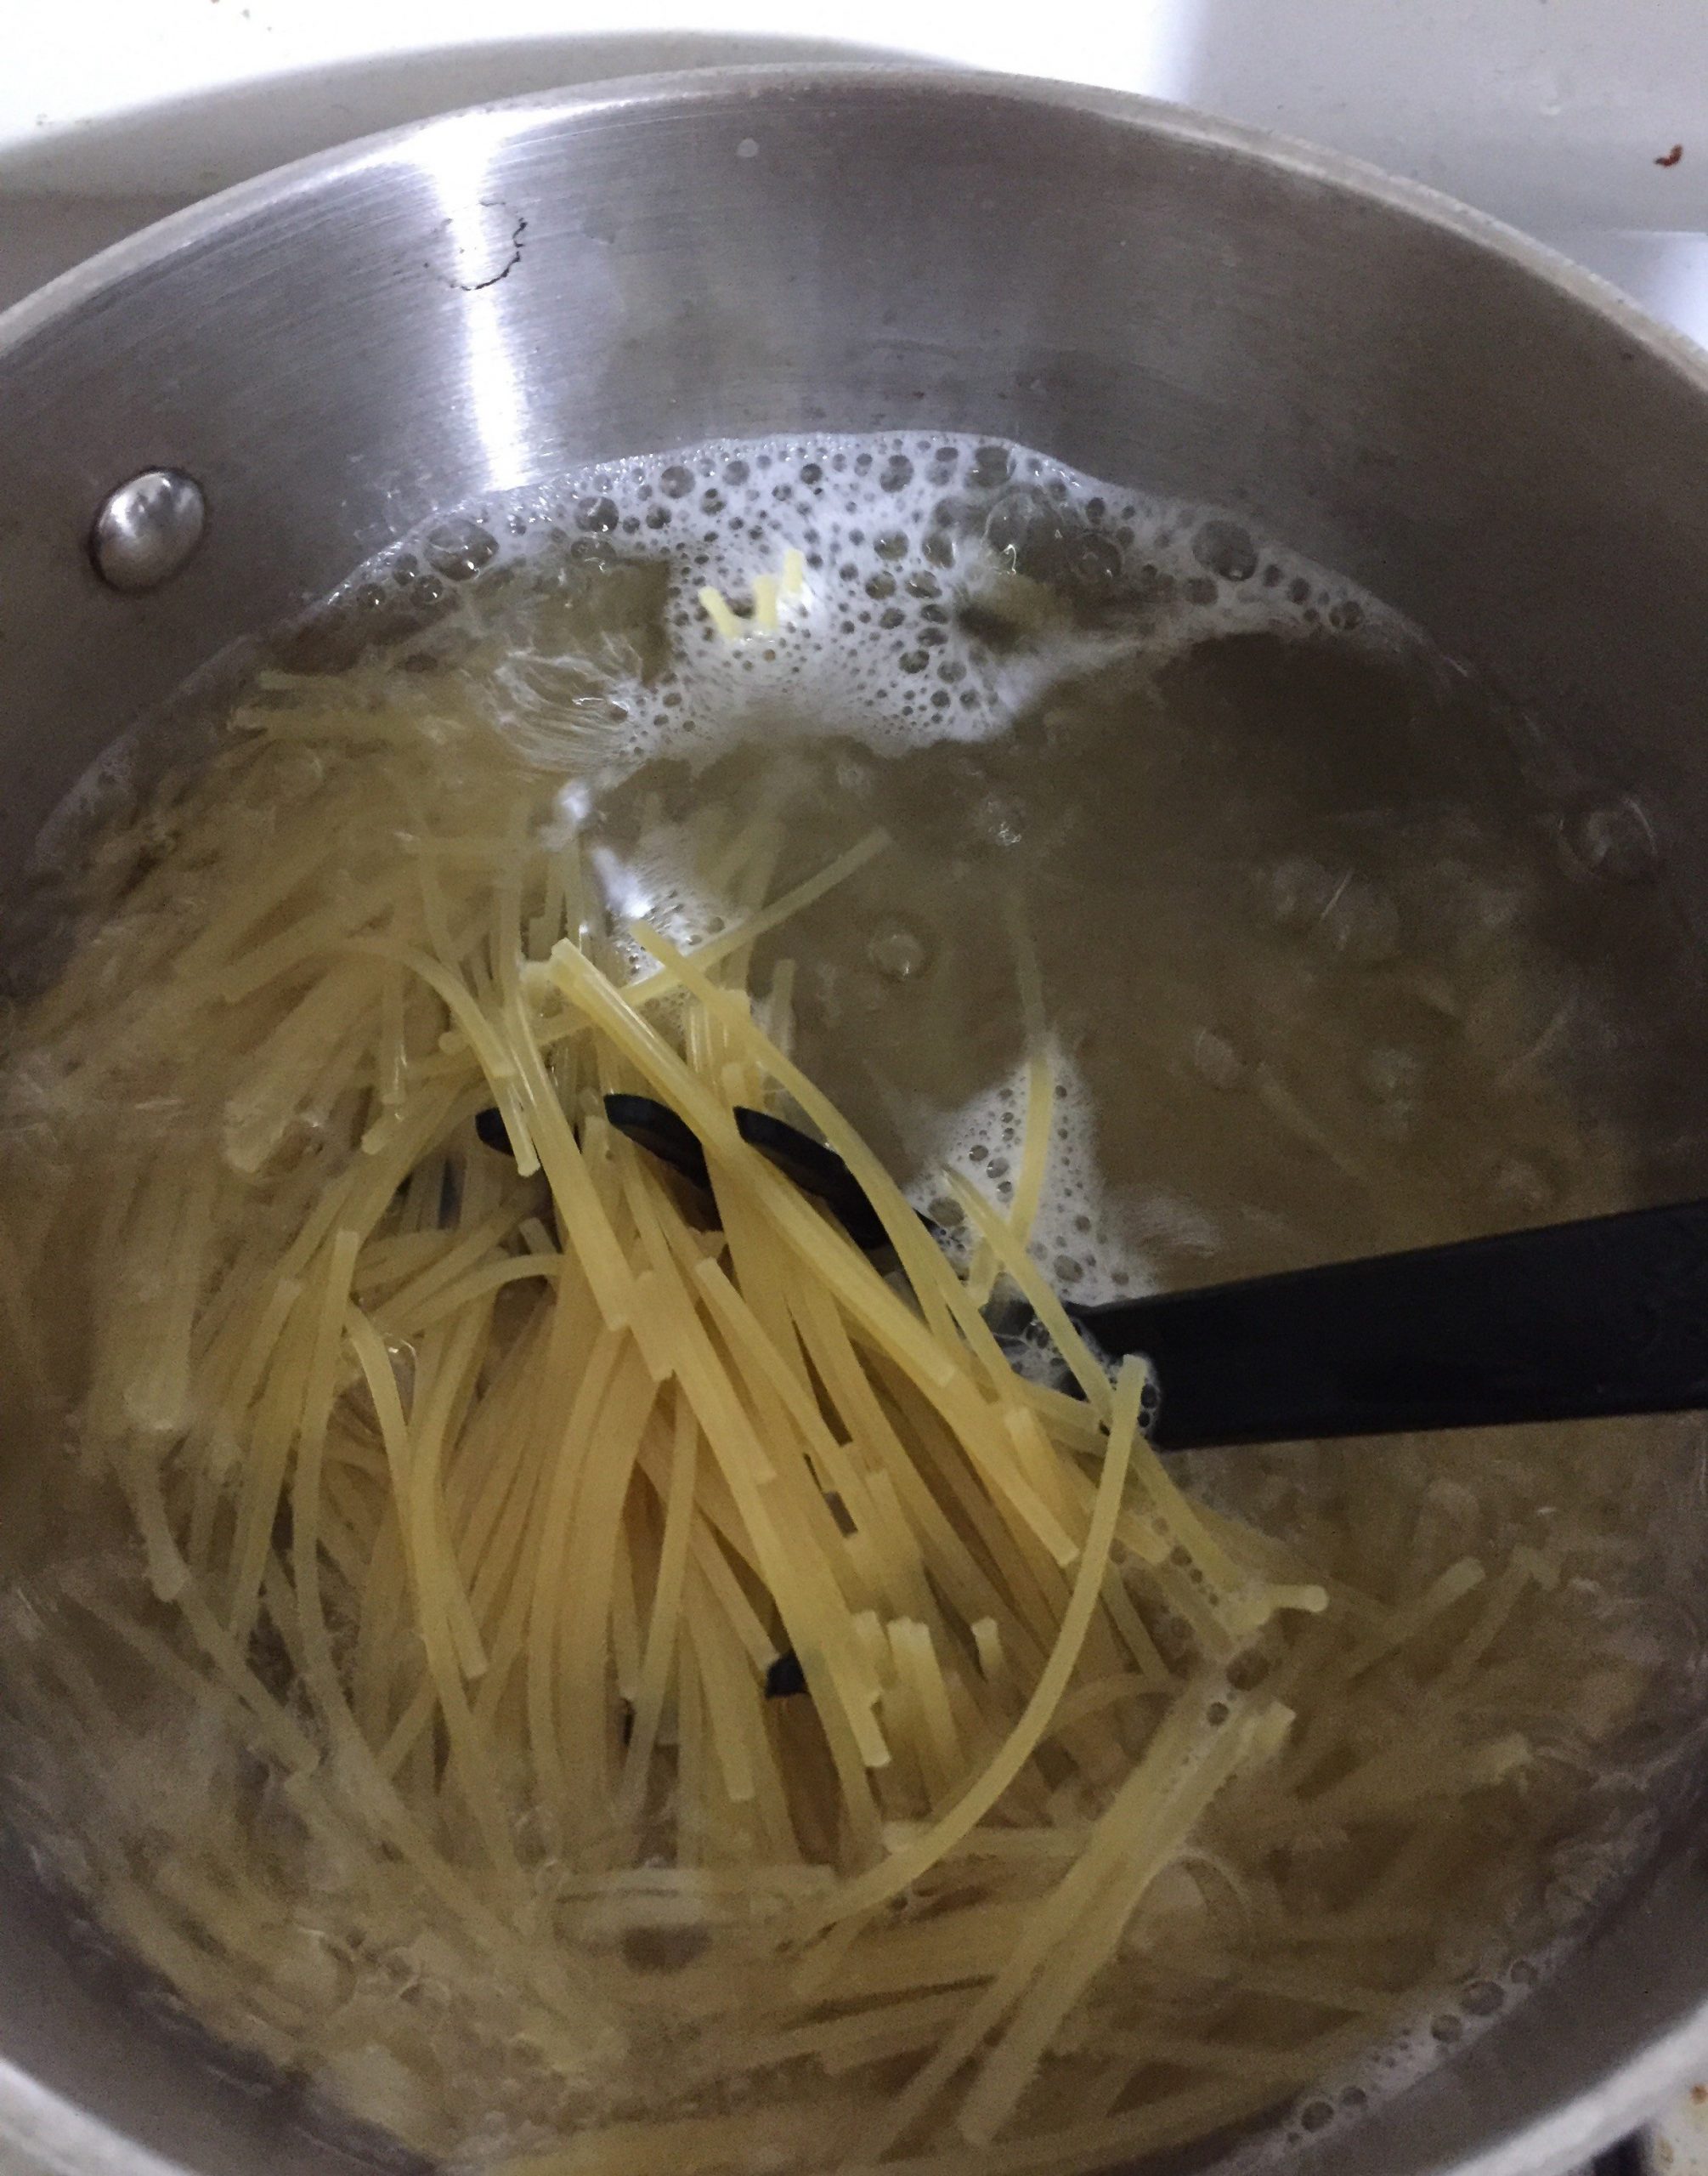 How to make stir fry spaghetti with Nigerian spaghetti brands